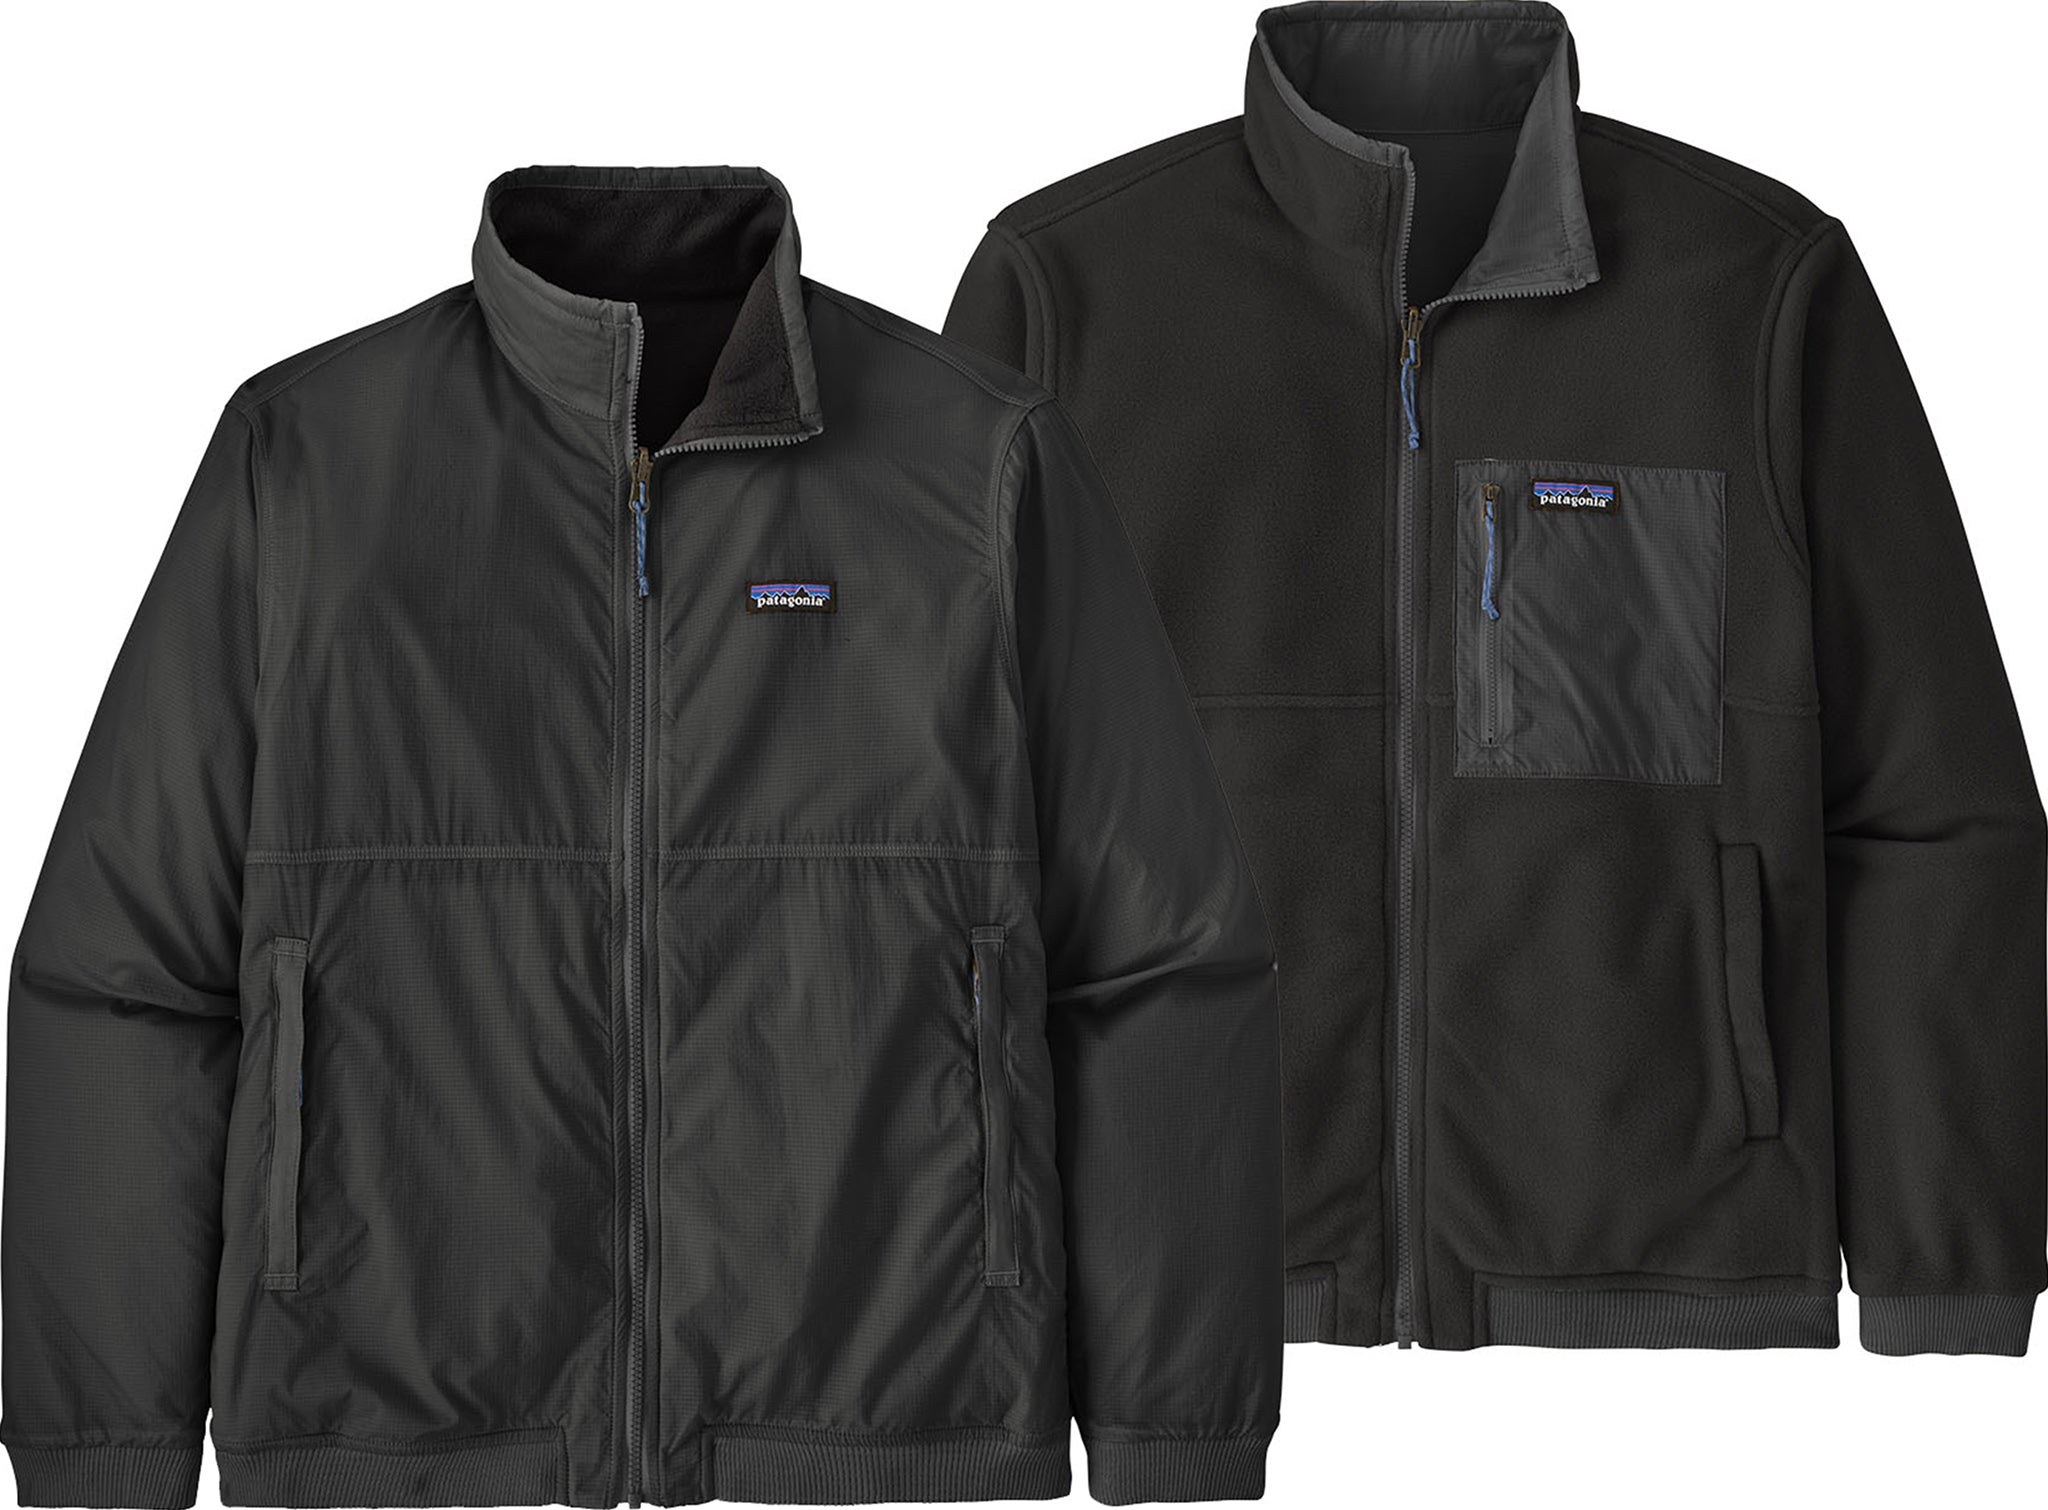 Reverse Fleece Jacket - Unisex - Made in Canada - Province of Canada